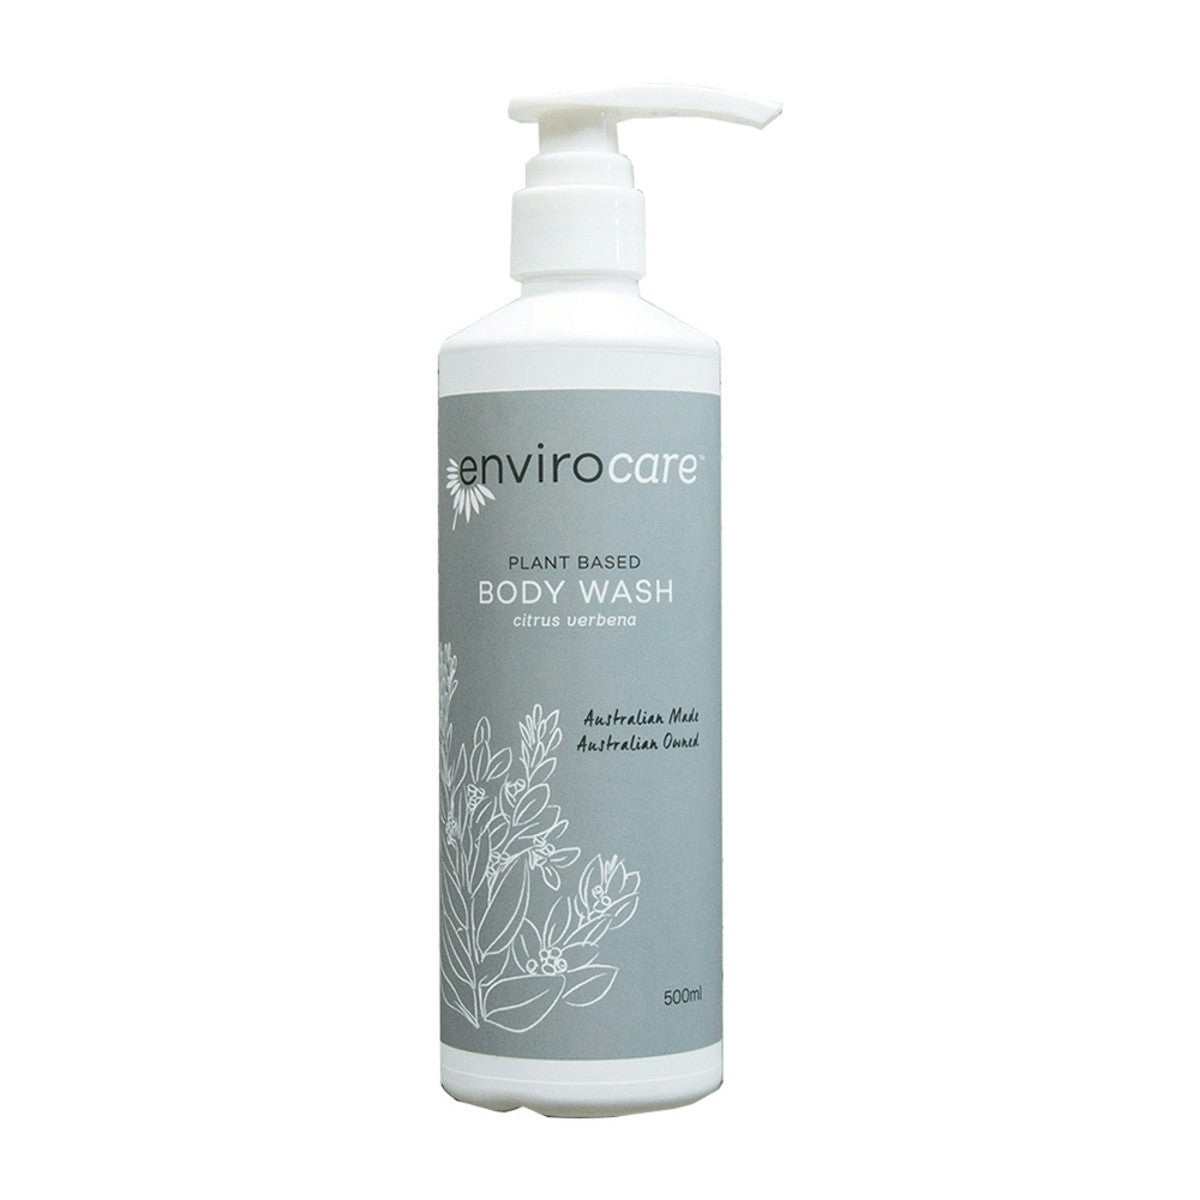 image of EnviroCare Plant Based Body Wash (citrus verbena) 500ml on white background 